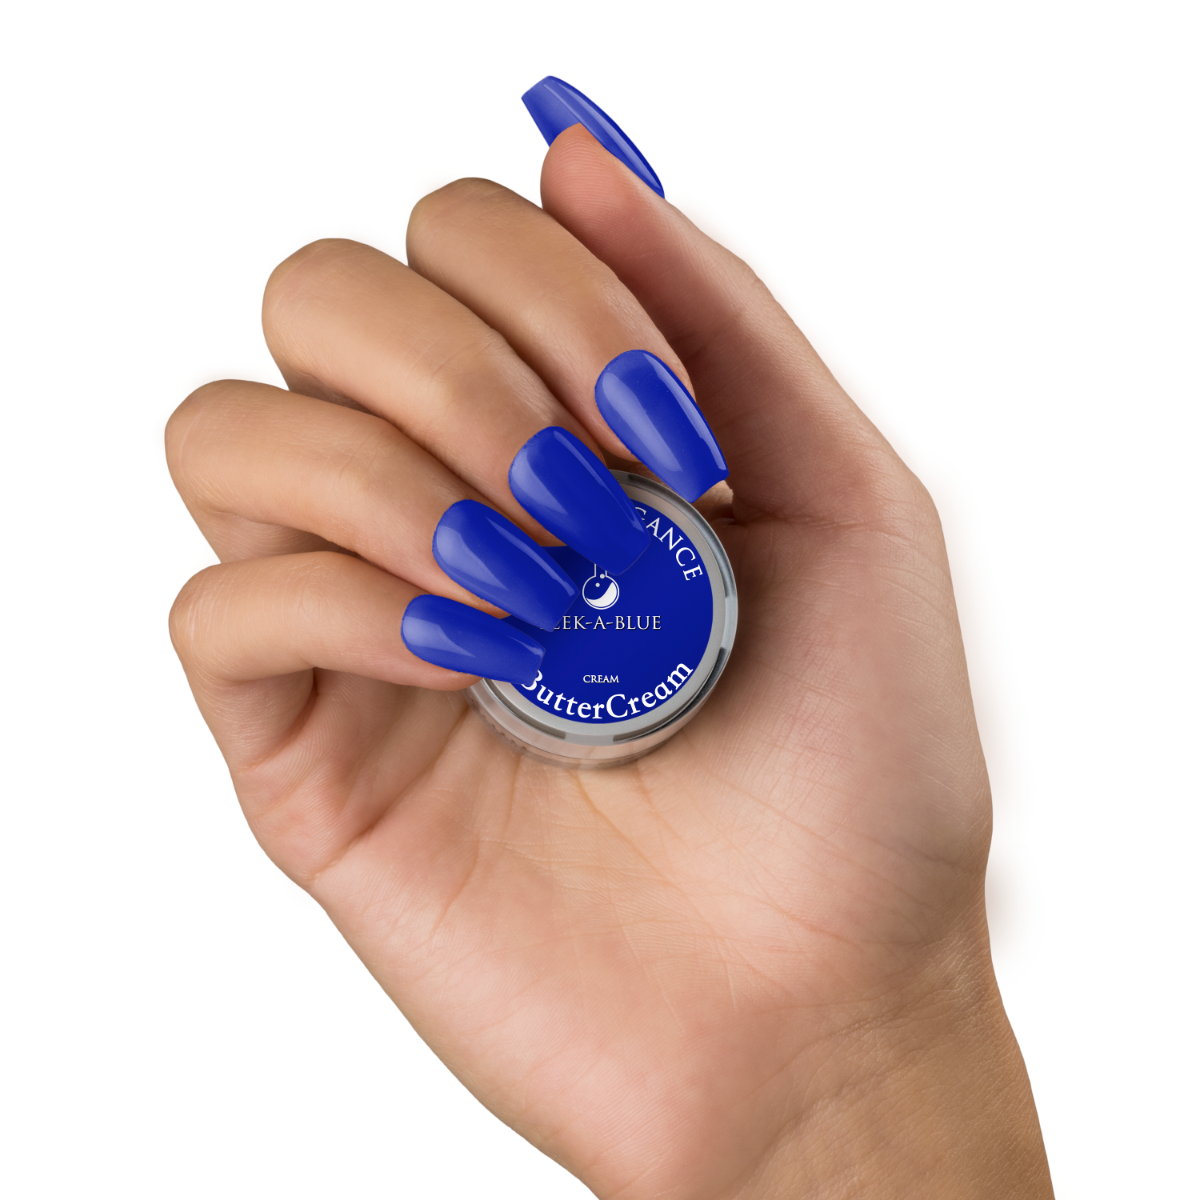 Light Elegance ButterCreams LED/UV - Peek-A-Blue :: New Packaging - Creata Beauty - Professional Beauty Products